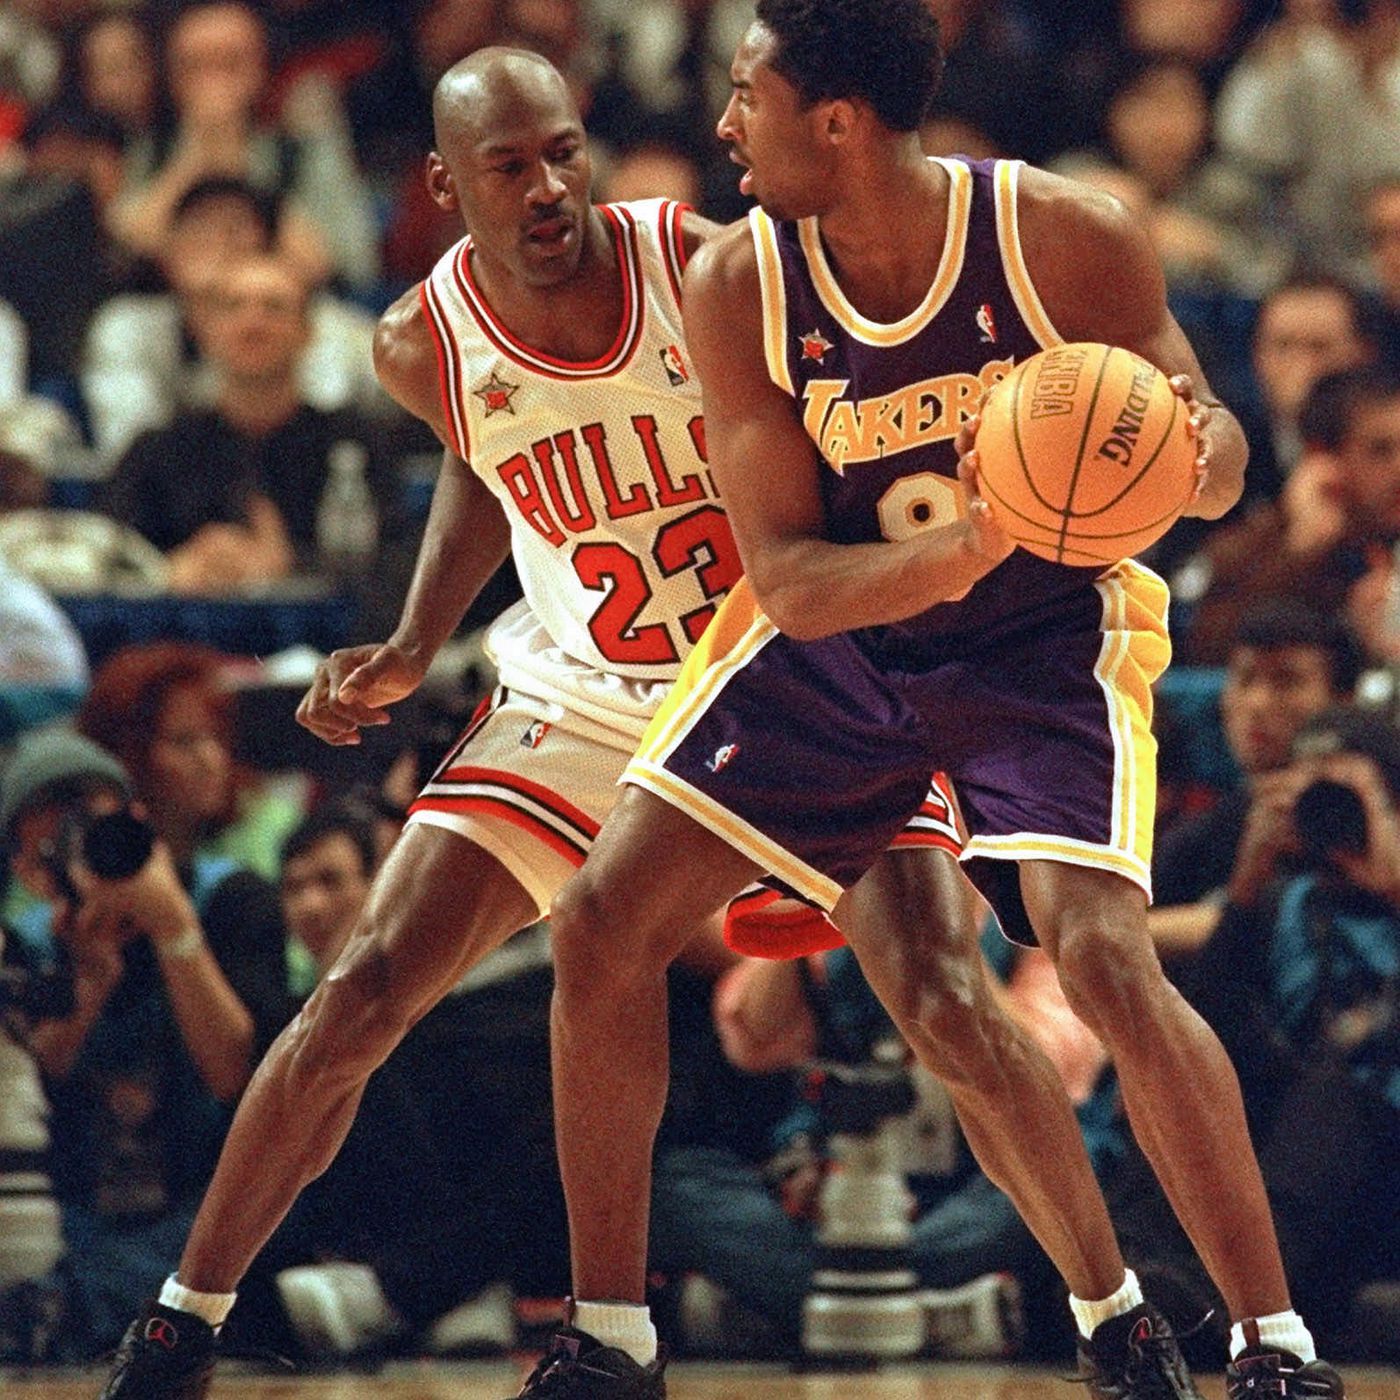 Michael Jordan on Kobe Bryant's death: 'Words can't describe...